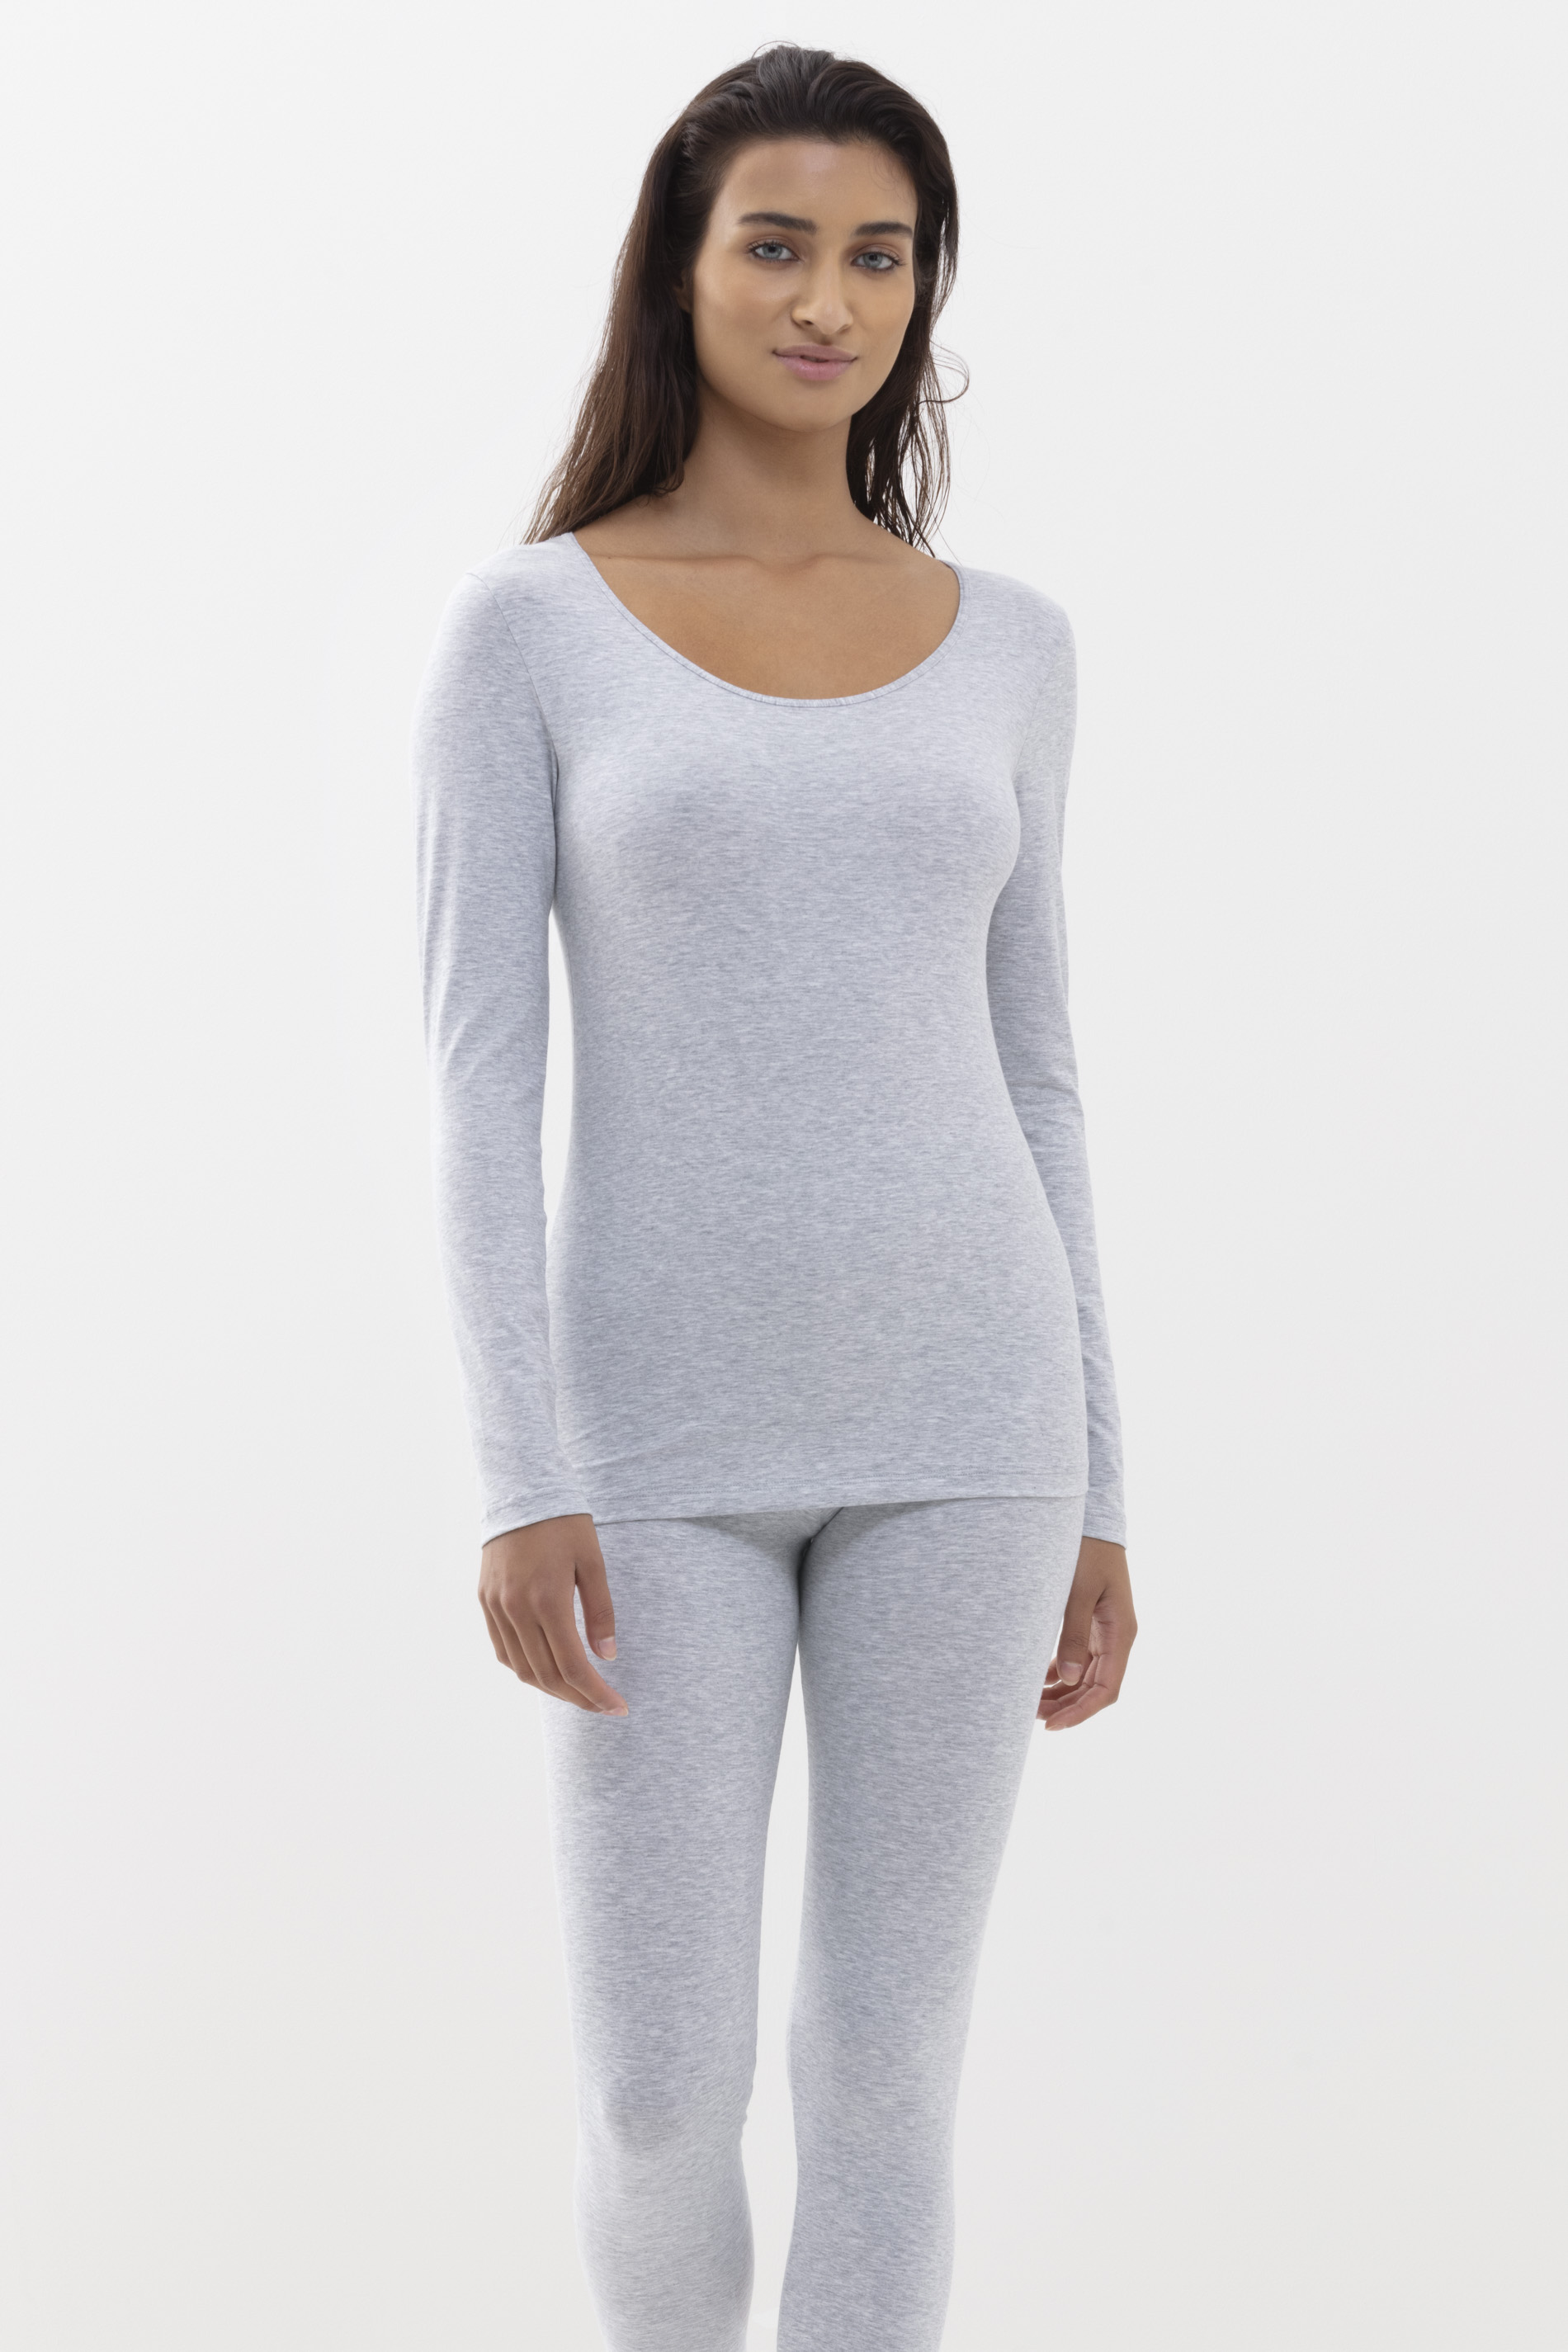 Shirt langarm Light Grey Melange Serie Cotton Pure Frontansicht | mey®